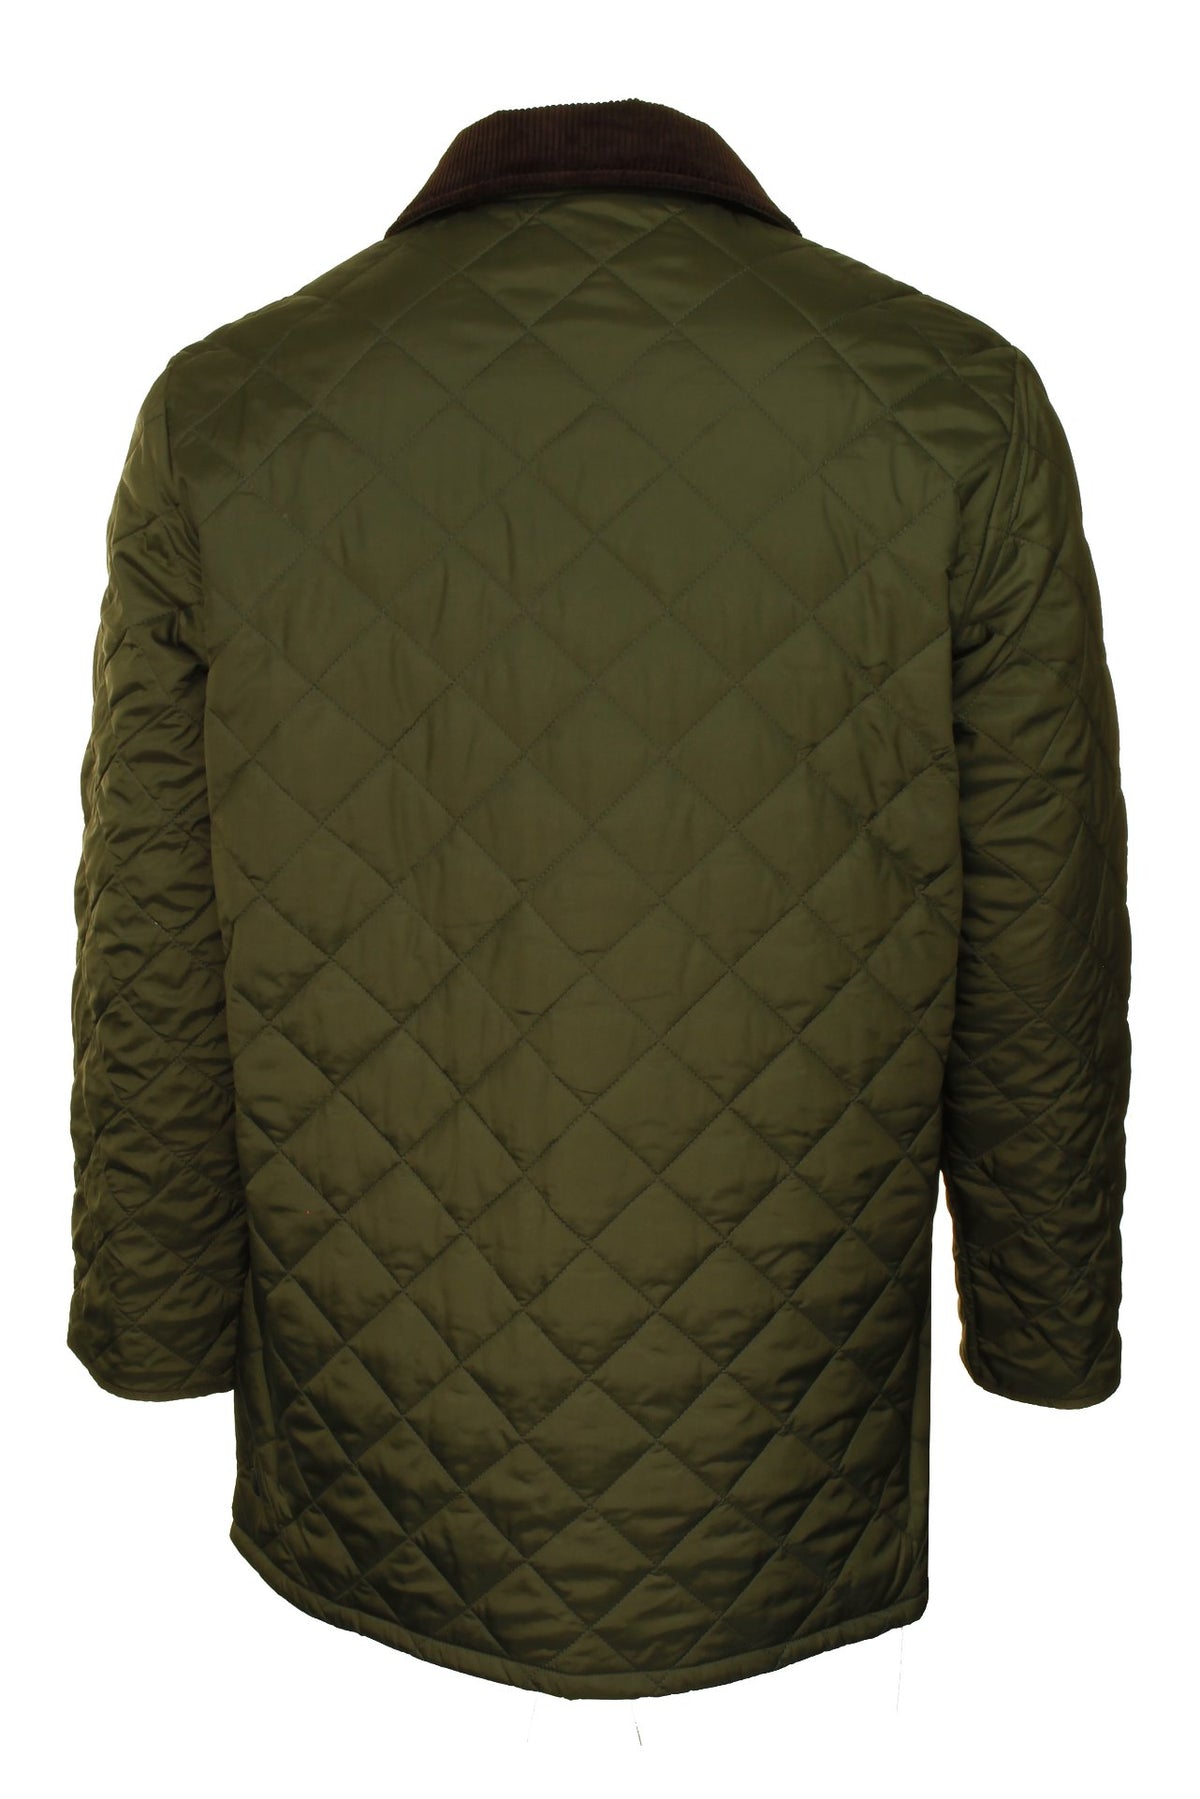 Barbour Men's Liddesdale Quilted Jacket, 04, Mqu0001, Olive